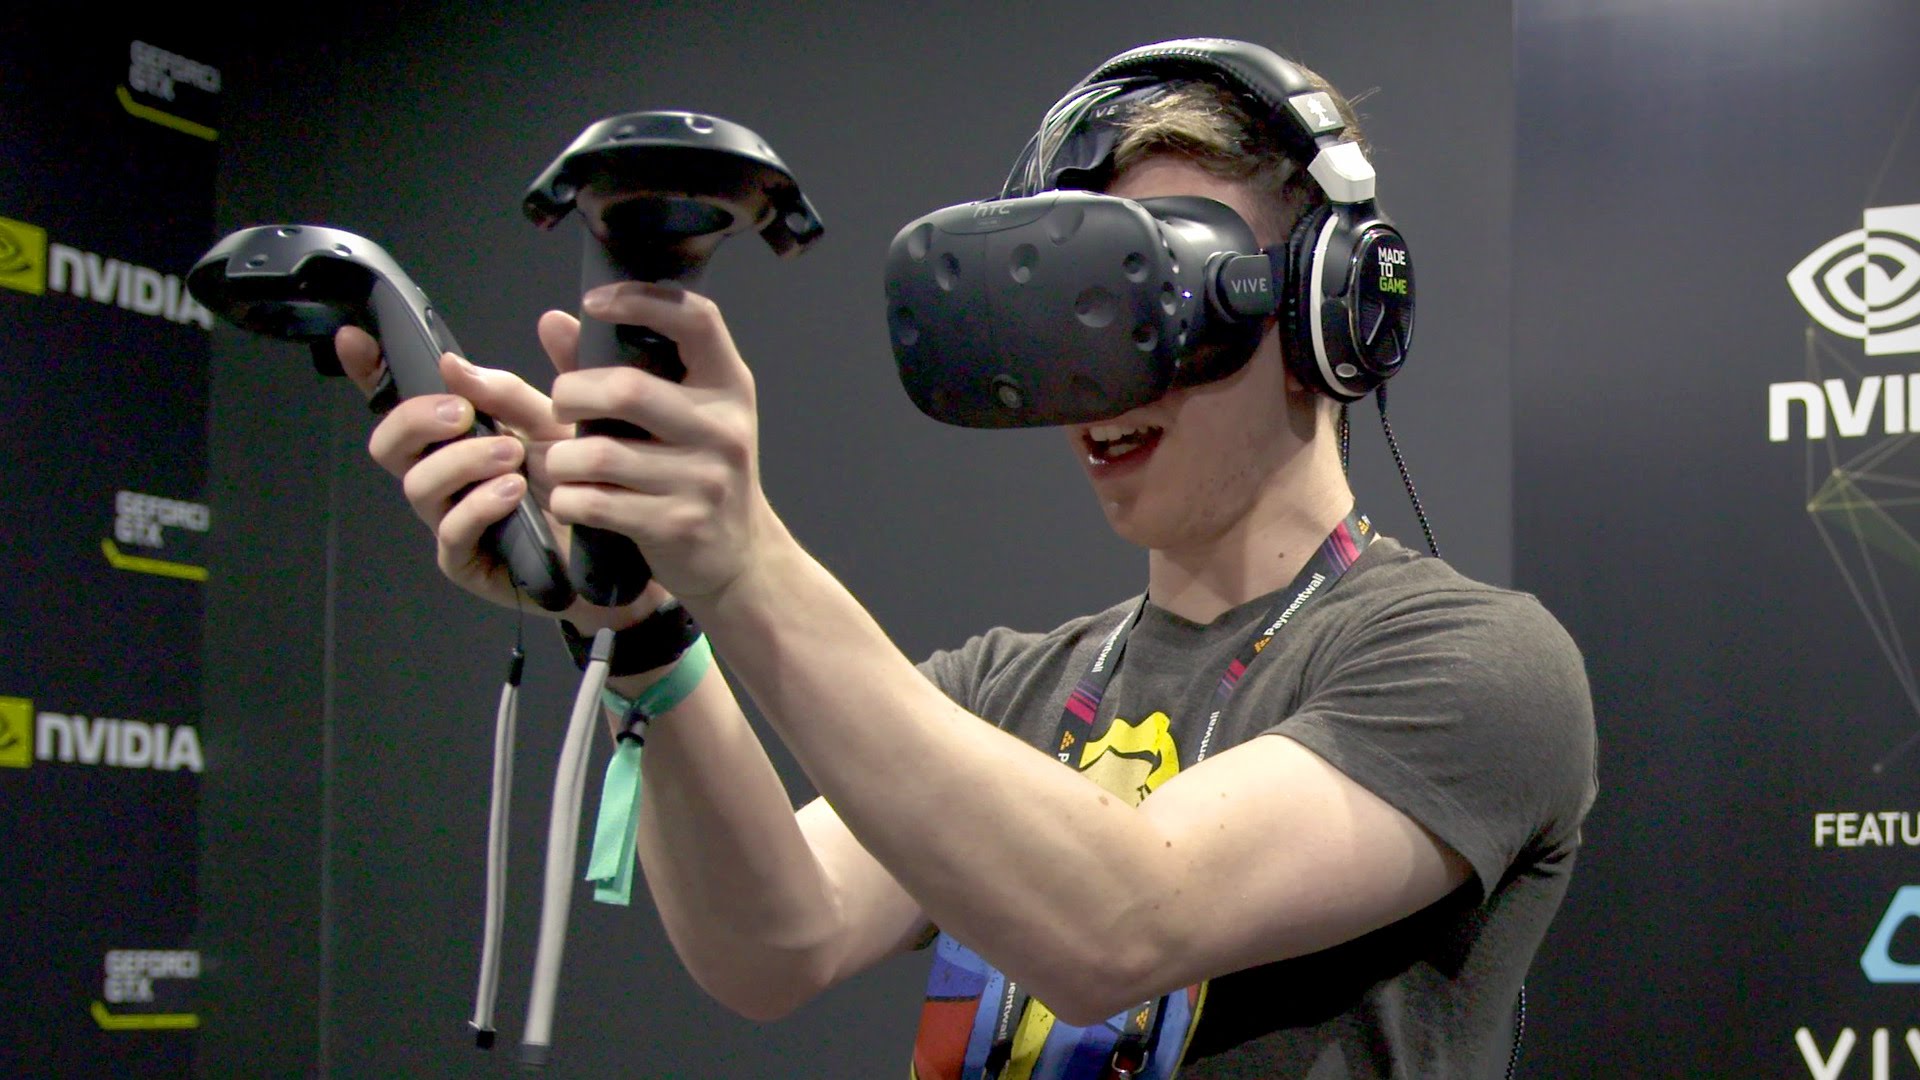 Vidéo: Oculus Rift vs HTC Vive vs PlayStation VR